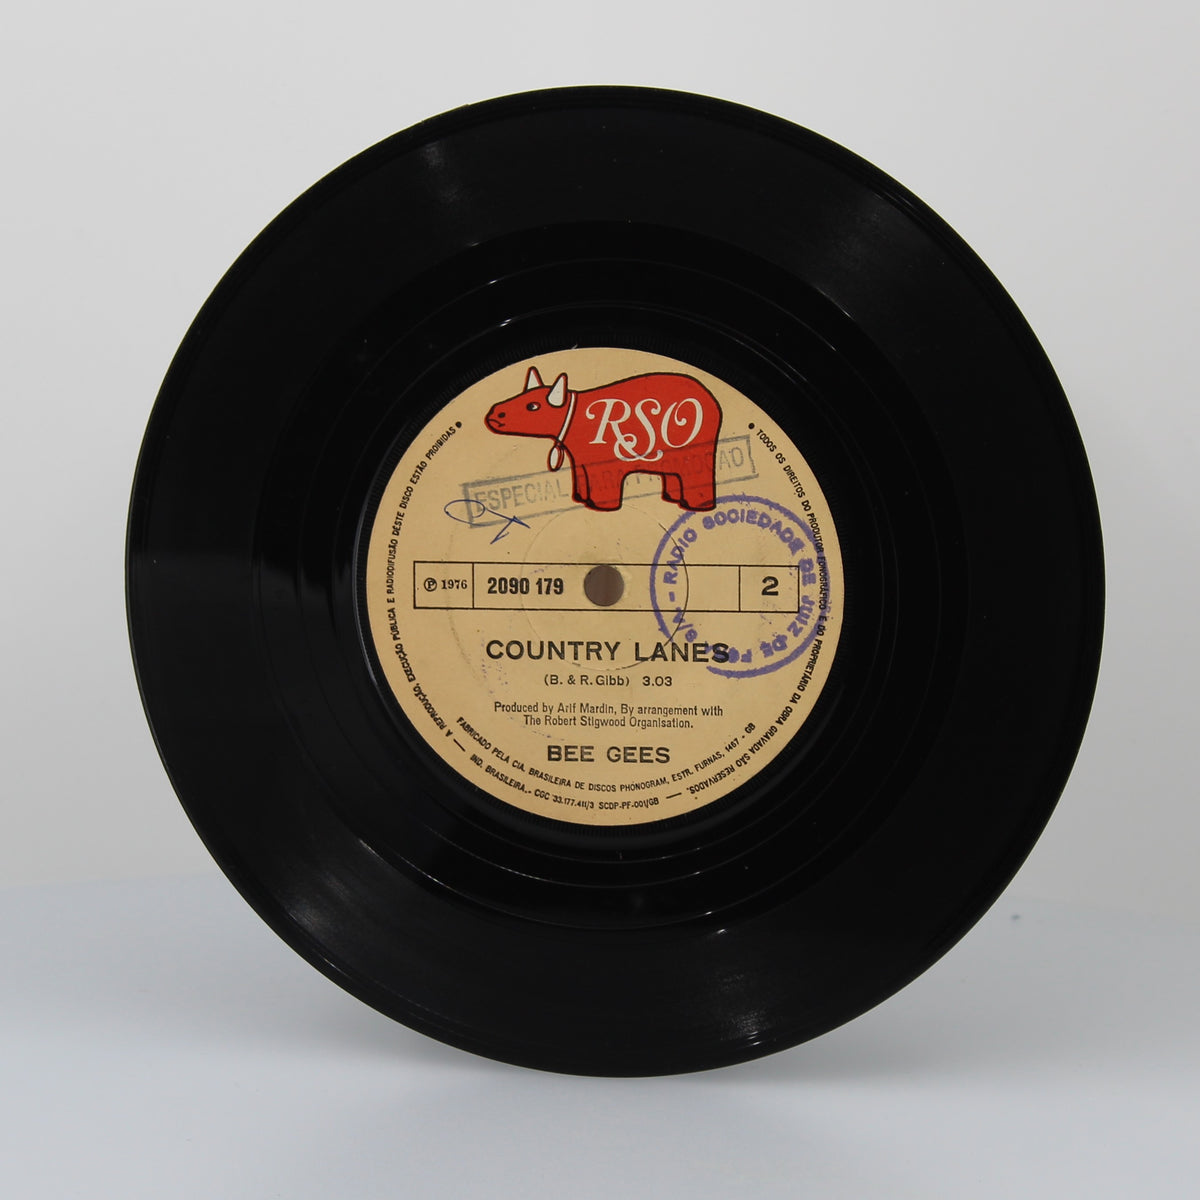 Bee Gees - Fanny, Vinyl 7&quot; Single 45Rpm, Brazil 1976